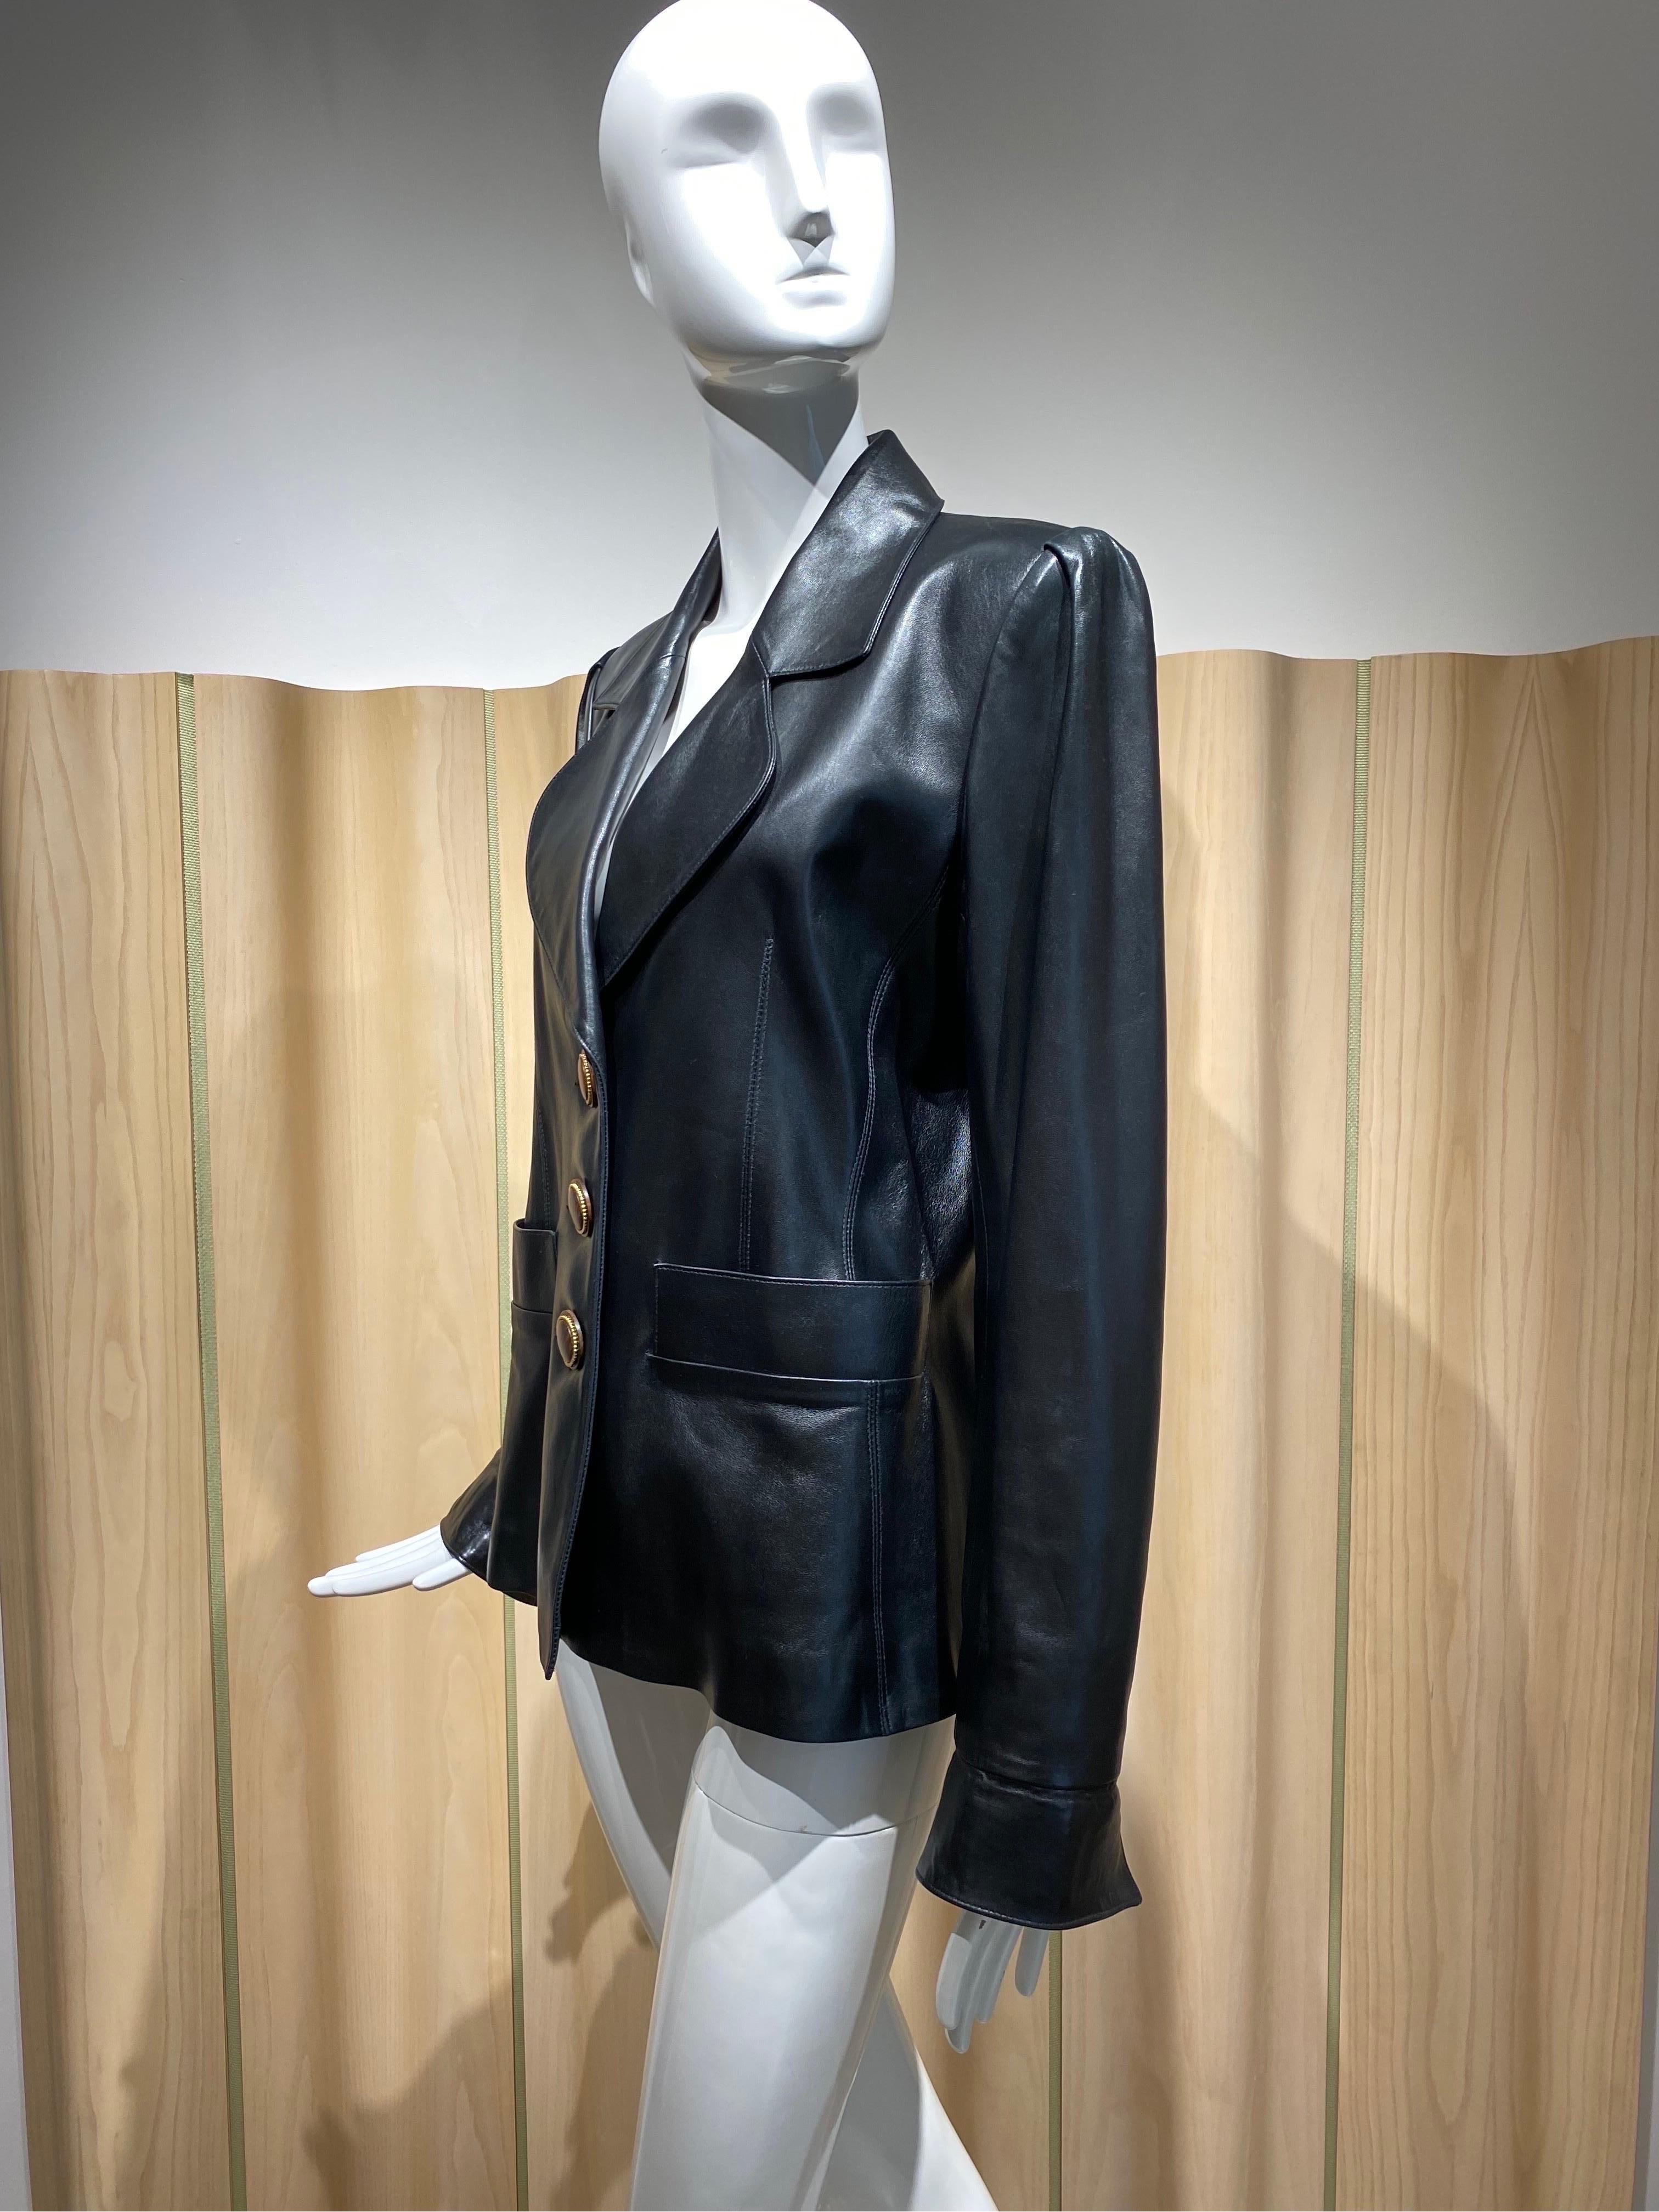 80s Saint Laurent Rive Gauche Black Leather Jacket. 
Soft lamb skin leather. Pockets and buttons. Jacket/Blazer marked size 42
Measurement:
Bust: 40”/ Waist: 37” / Hip: 46”/ Sleeve: 26”/ Jacket length: 24”/ shoulder : 16.5”

**Jacket has been